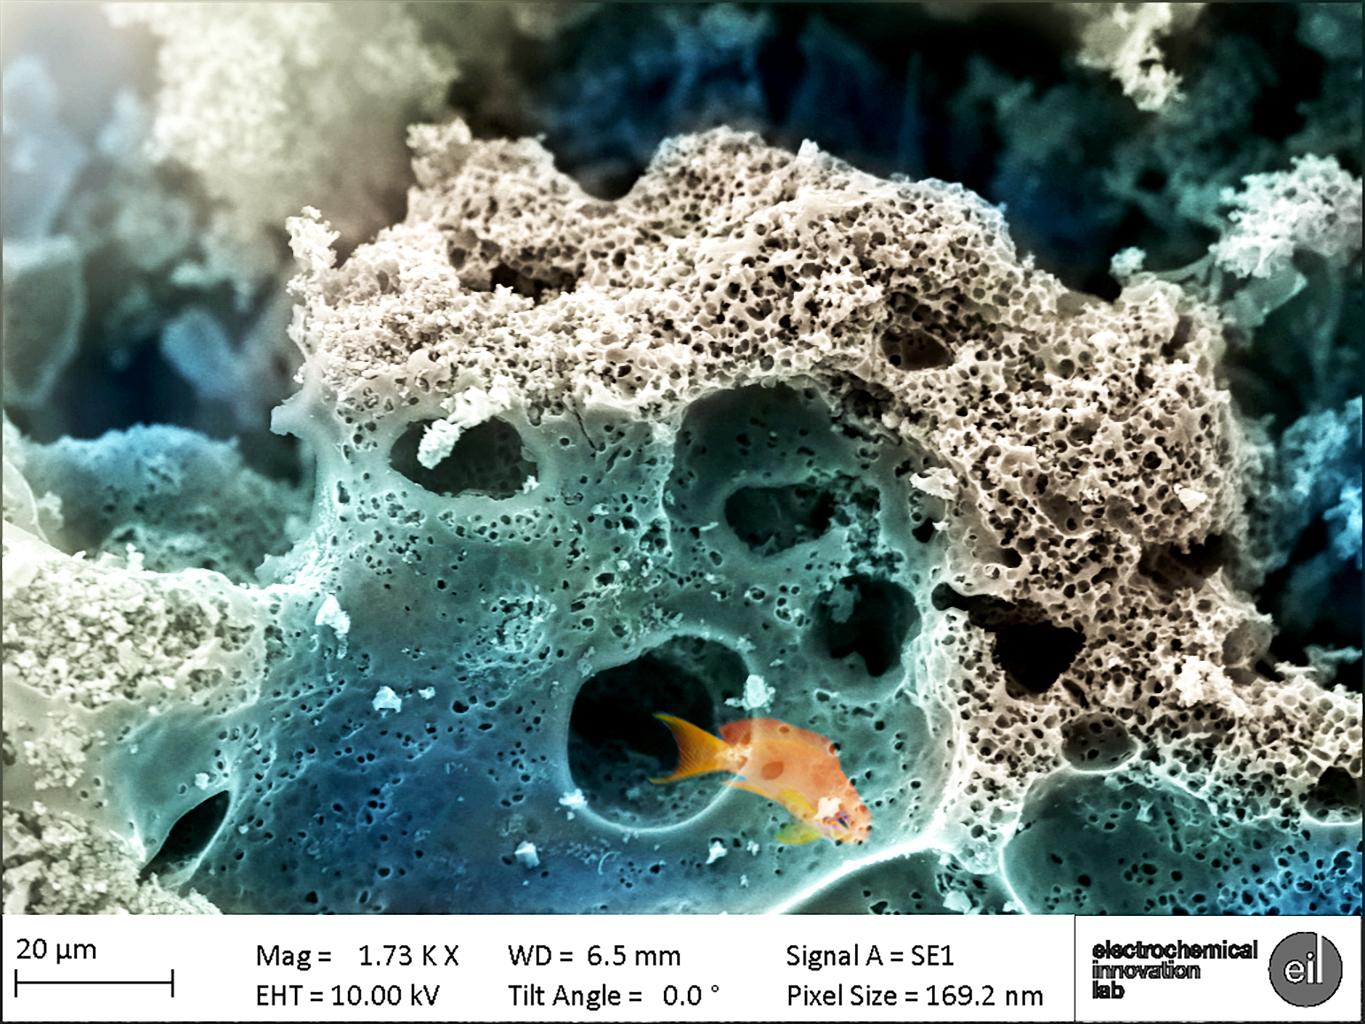 SEM image of porousKOH-activated carbon mimicking aquatic life